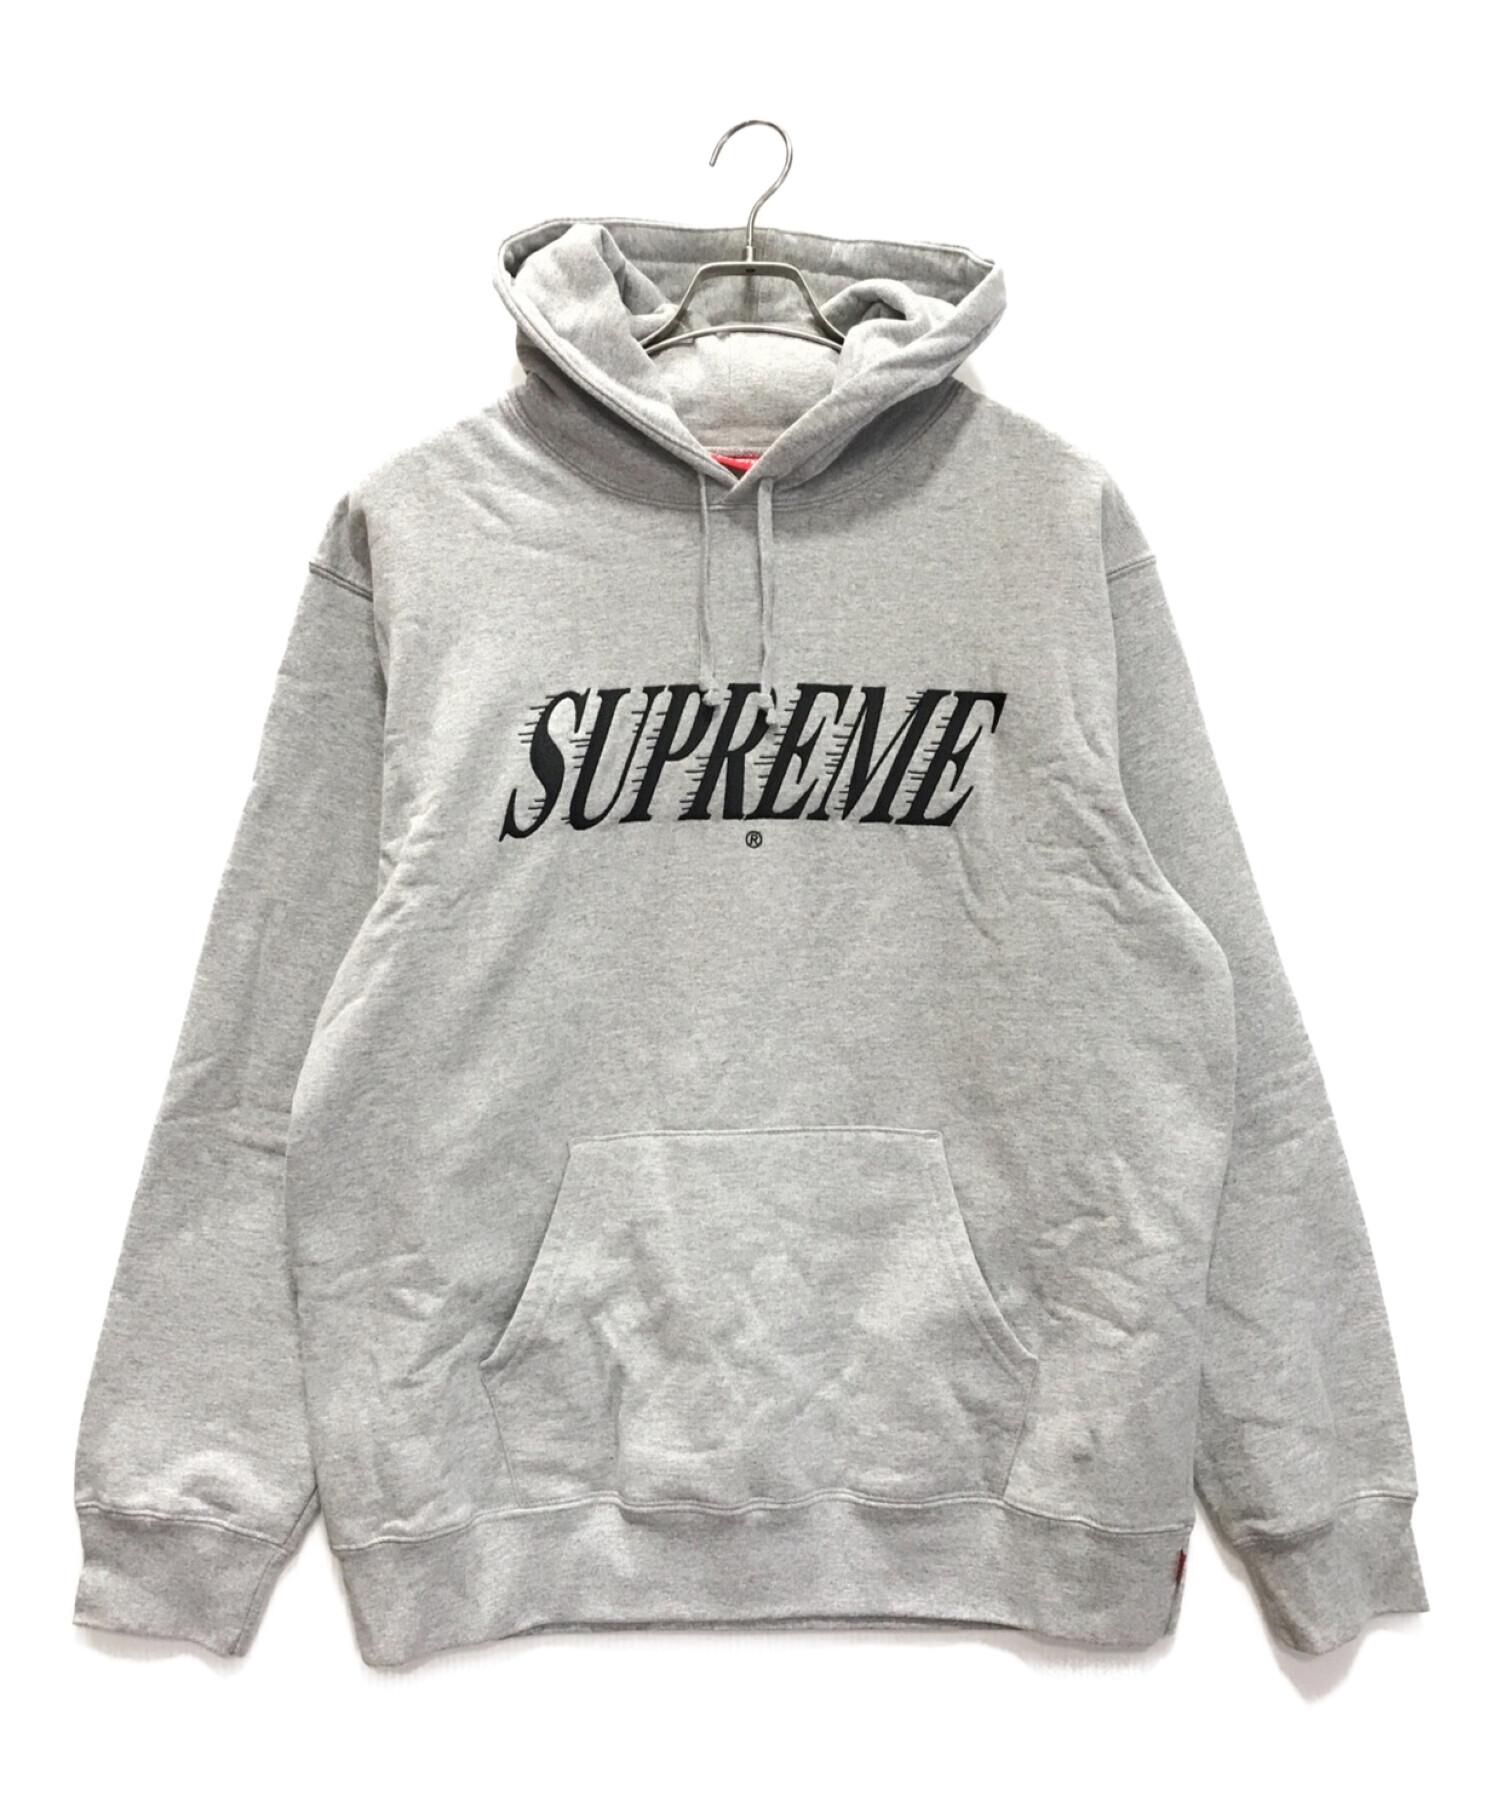 supreme crossover hooded sweatshirt